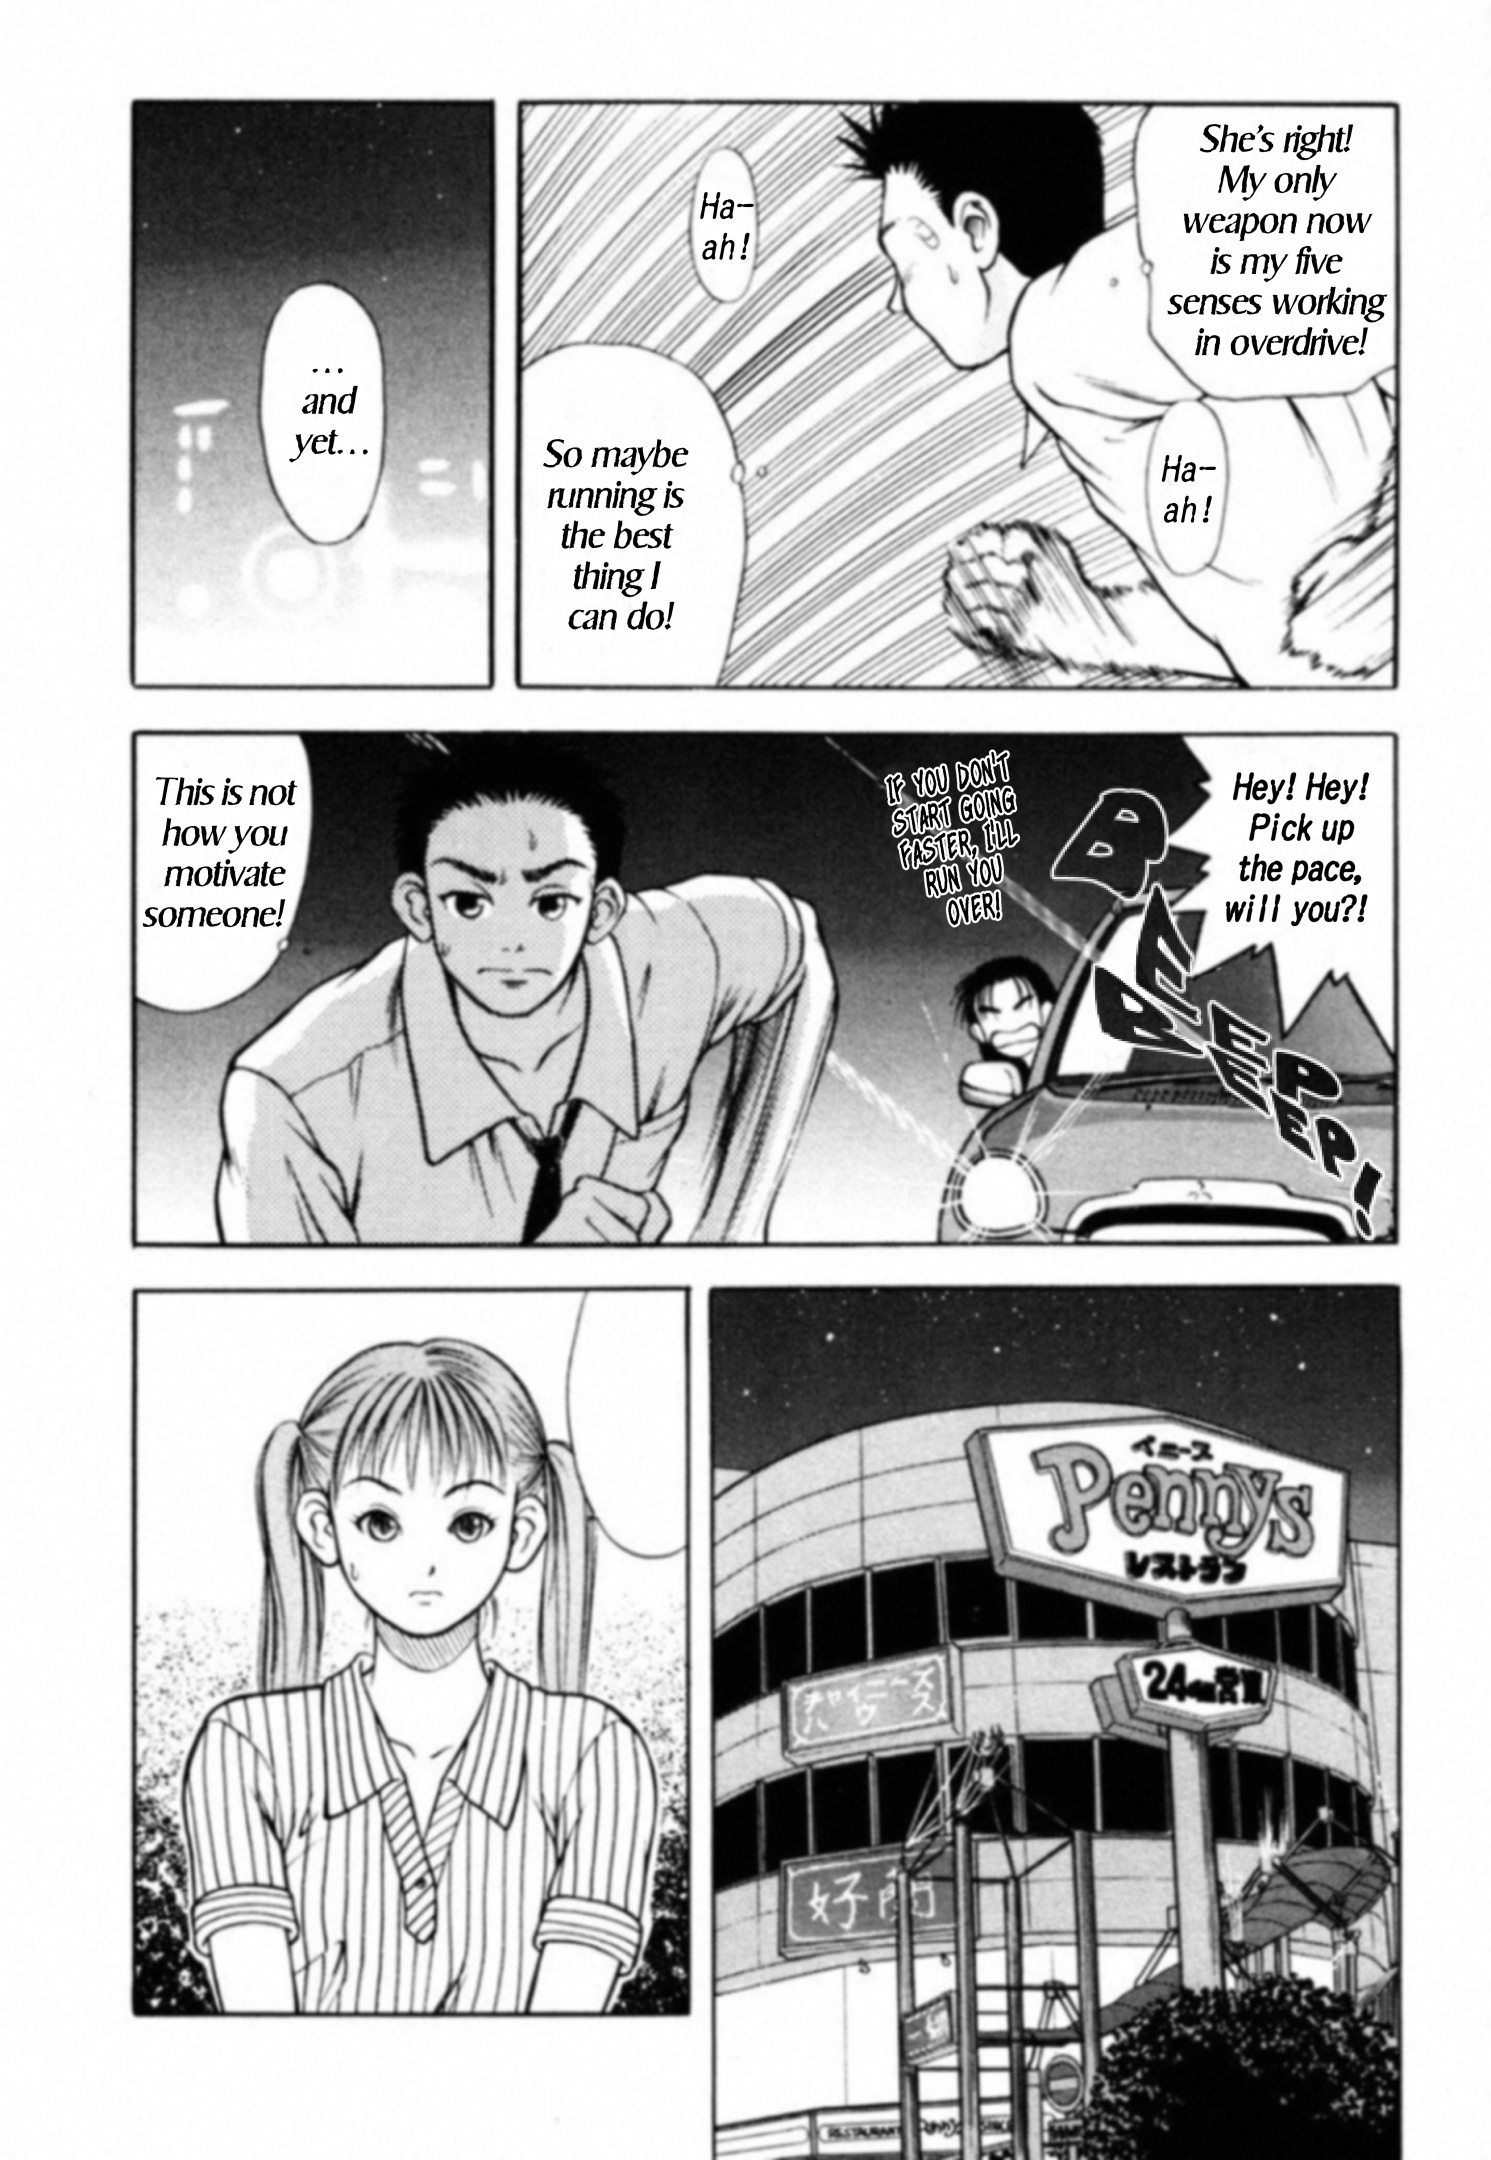 Kakeru Vol.1 Chapter 4: The Runaway Girl - 4 - Picture 3